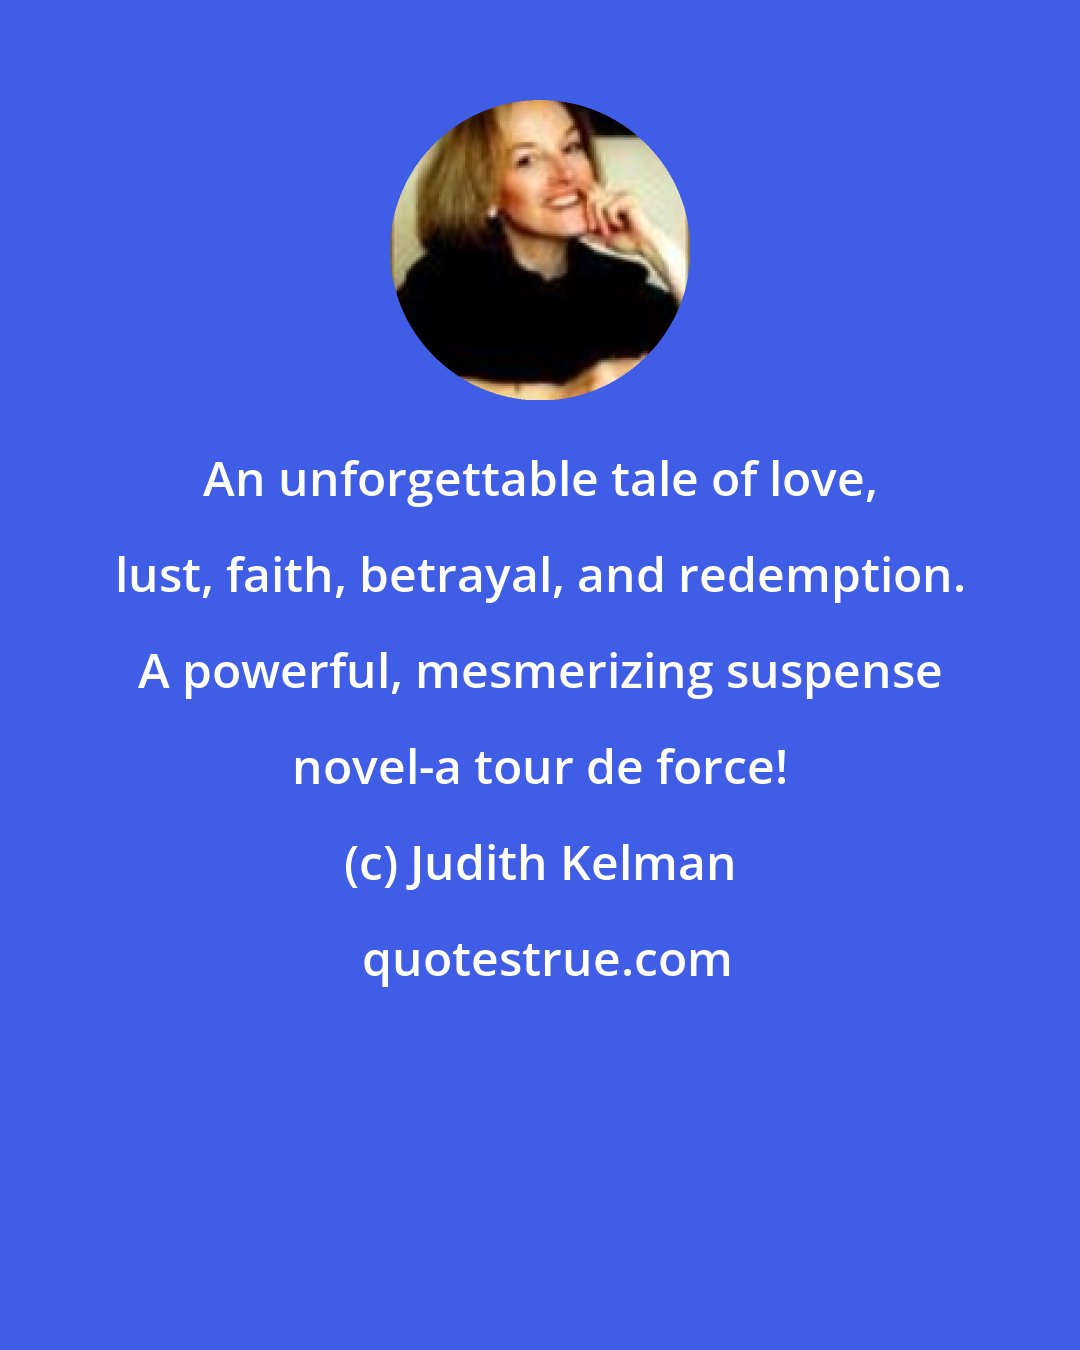 Judith Kelman: An unforgettable tale of love, lust, faith, betrayal, and redemption. A powerful, mesmerizing suspense novel-a tour de force!